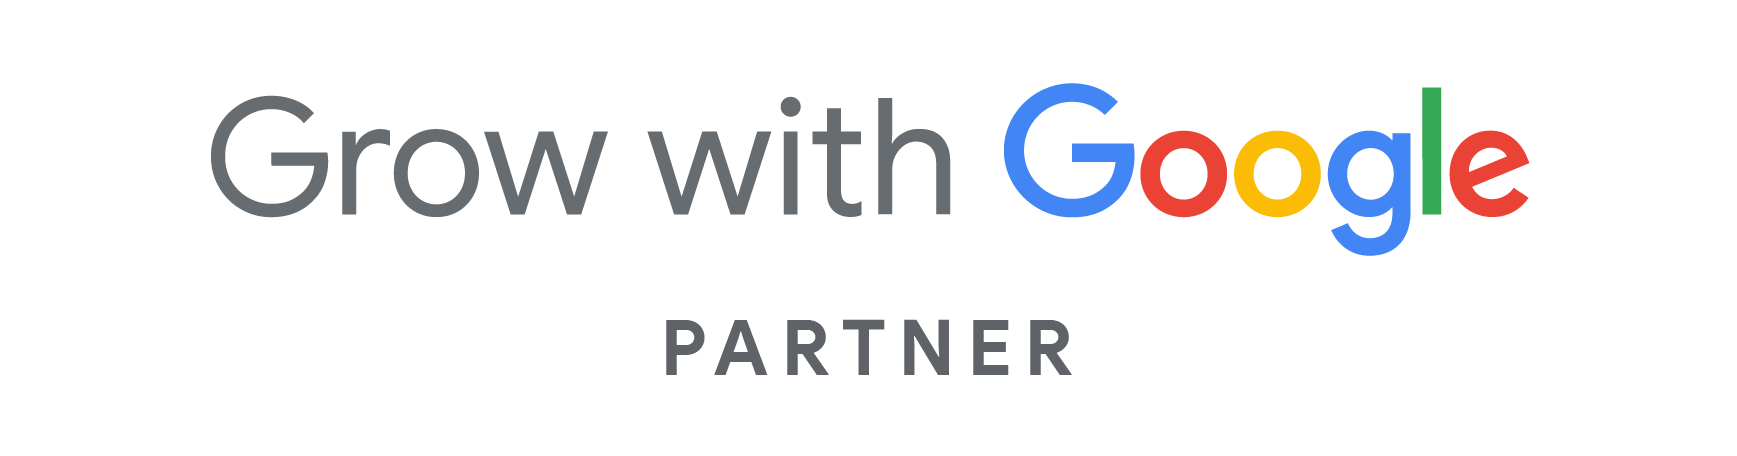 grow with google partner logo